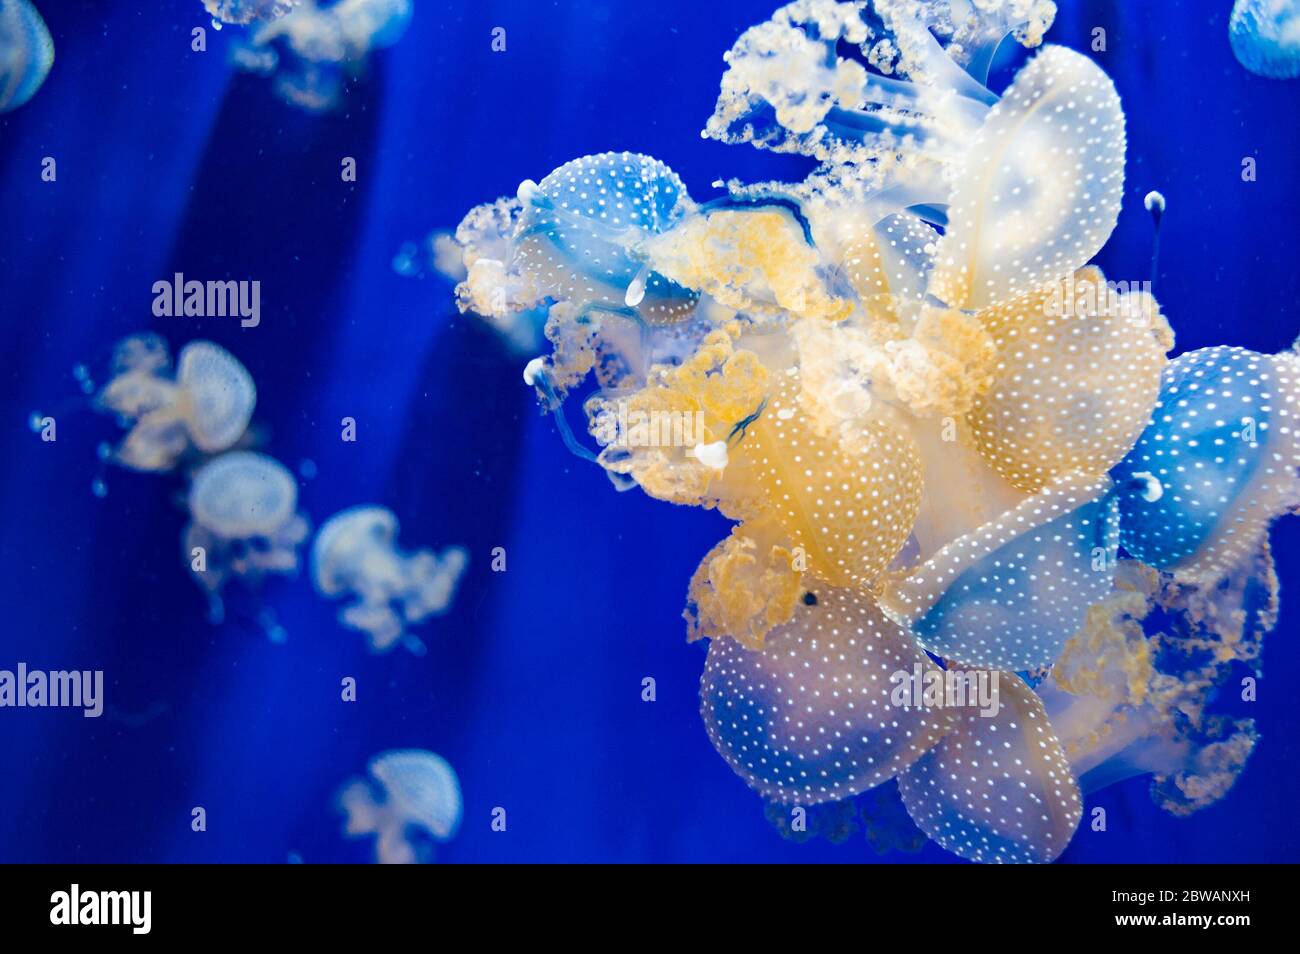 Un mazzo di pesci di gelatineria Phyllorhiza punctata (campana galleggiante, medusa macchiata australiana, medusa bruna o medusa bianca) in acquario. Foto Stock